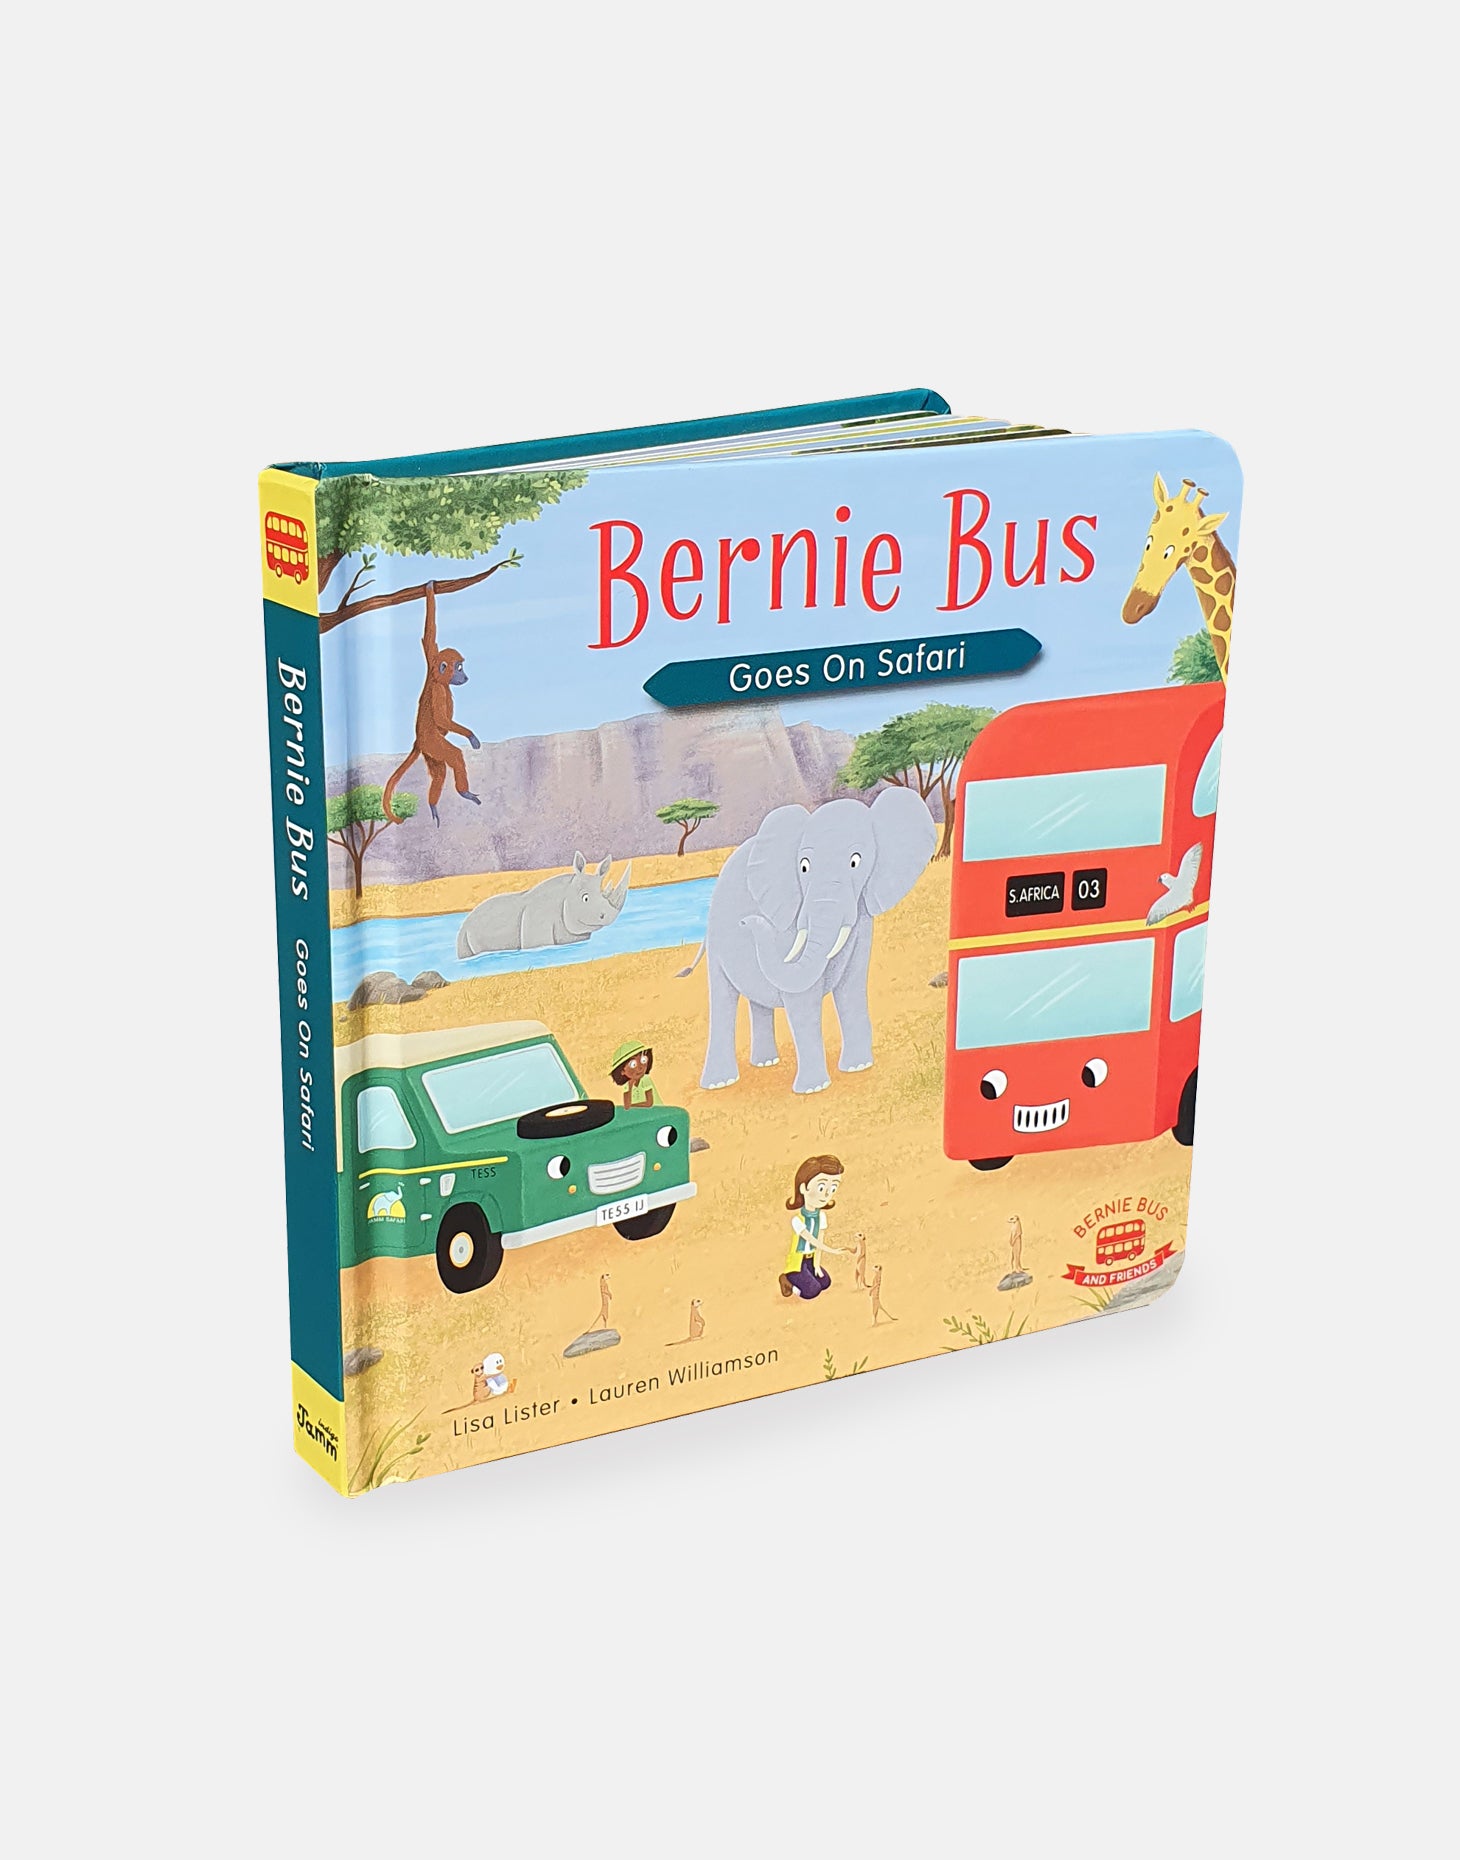 Bernie Bus goes on Safari by Indigo jamm